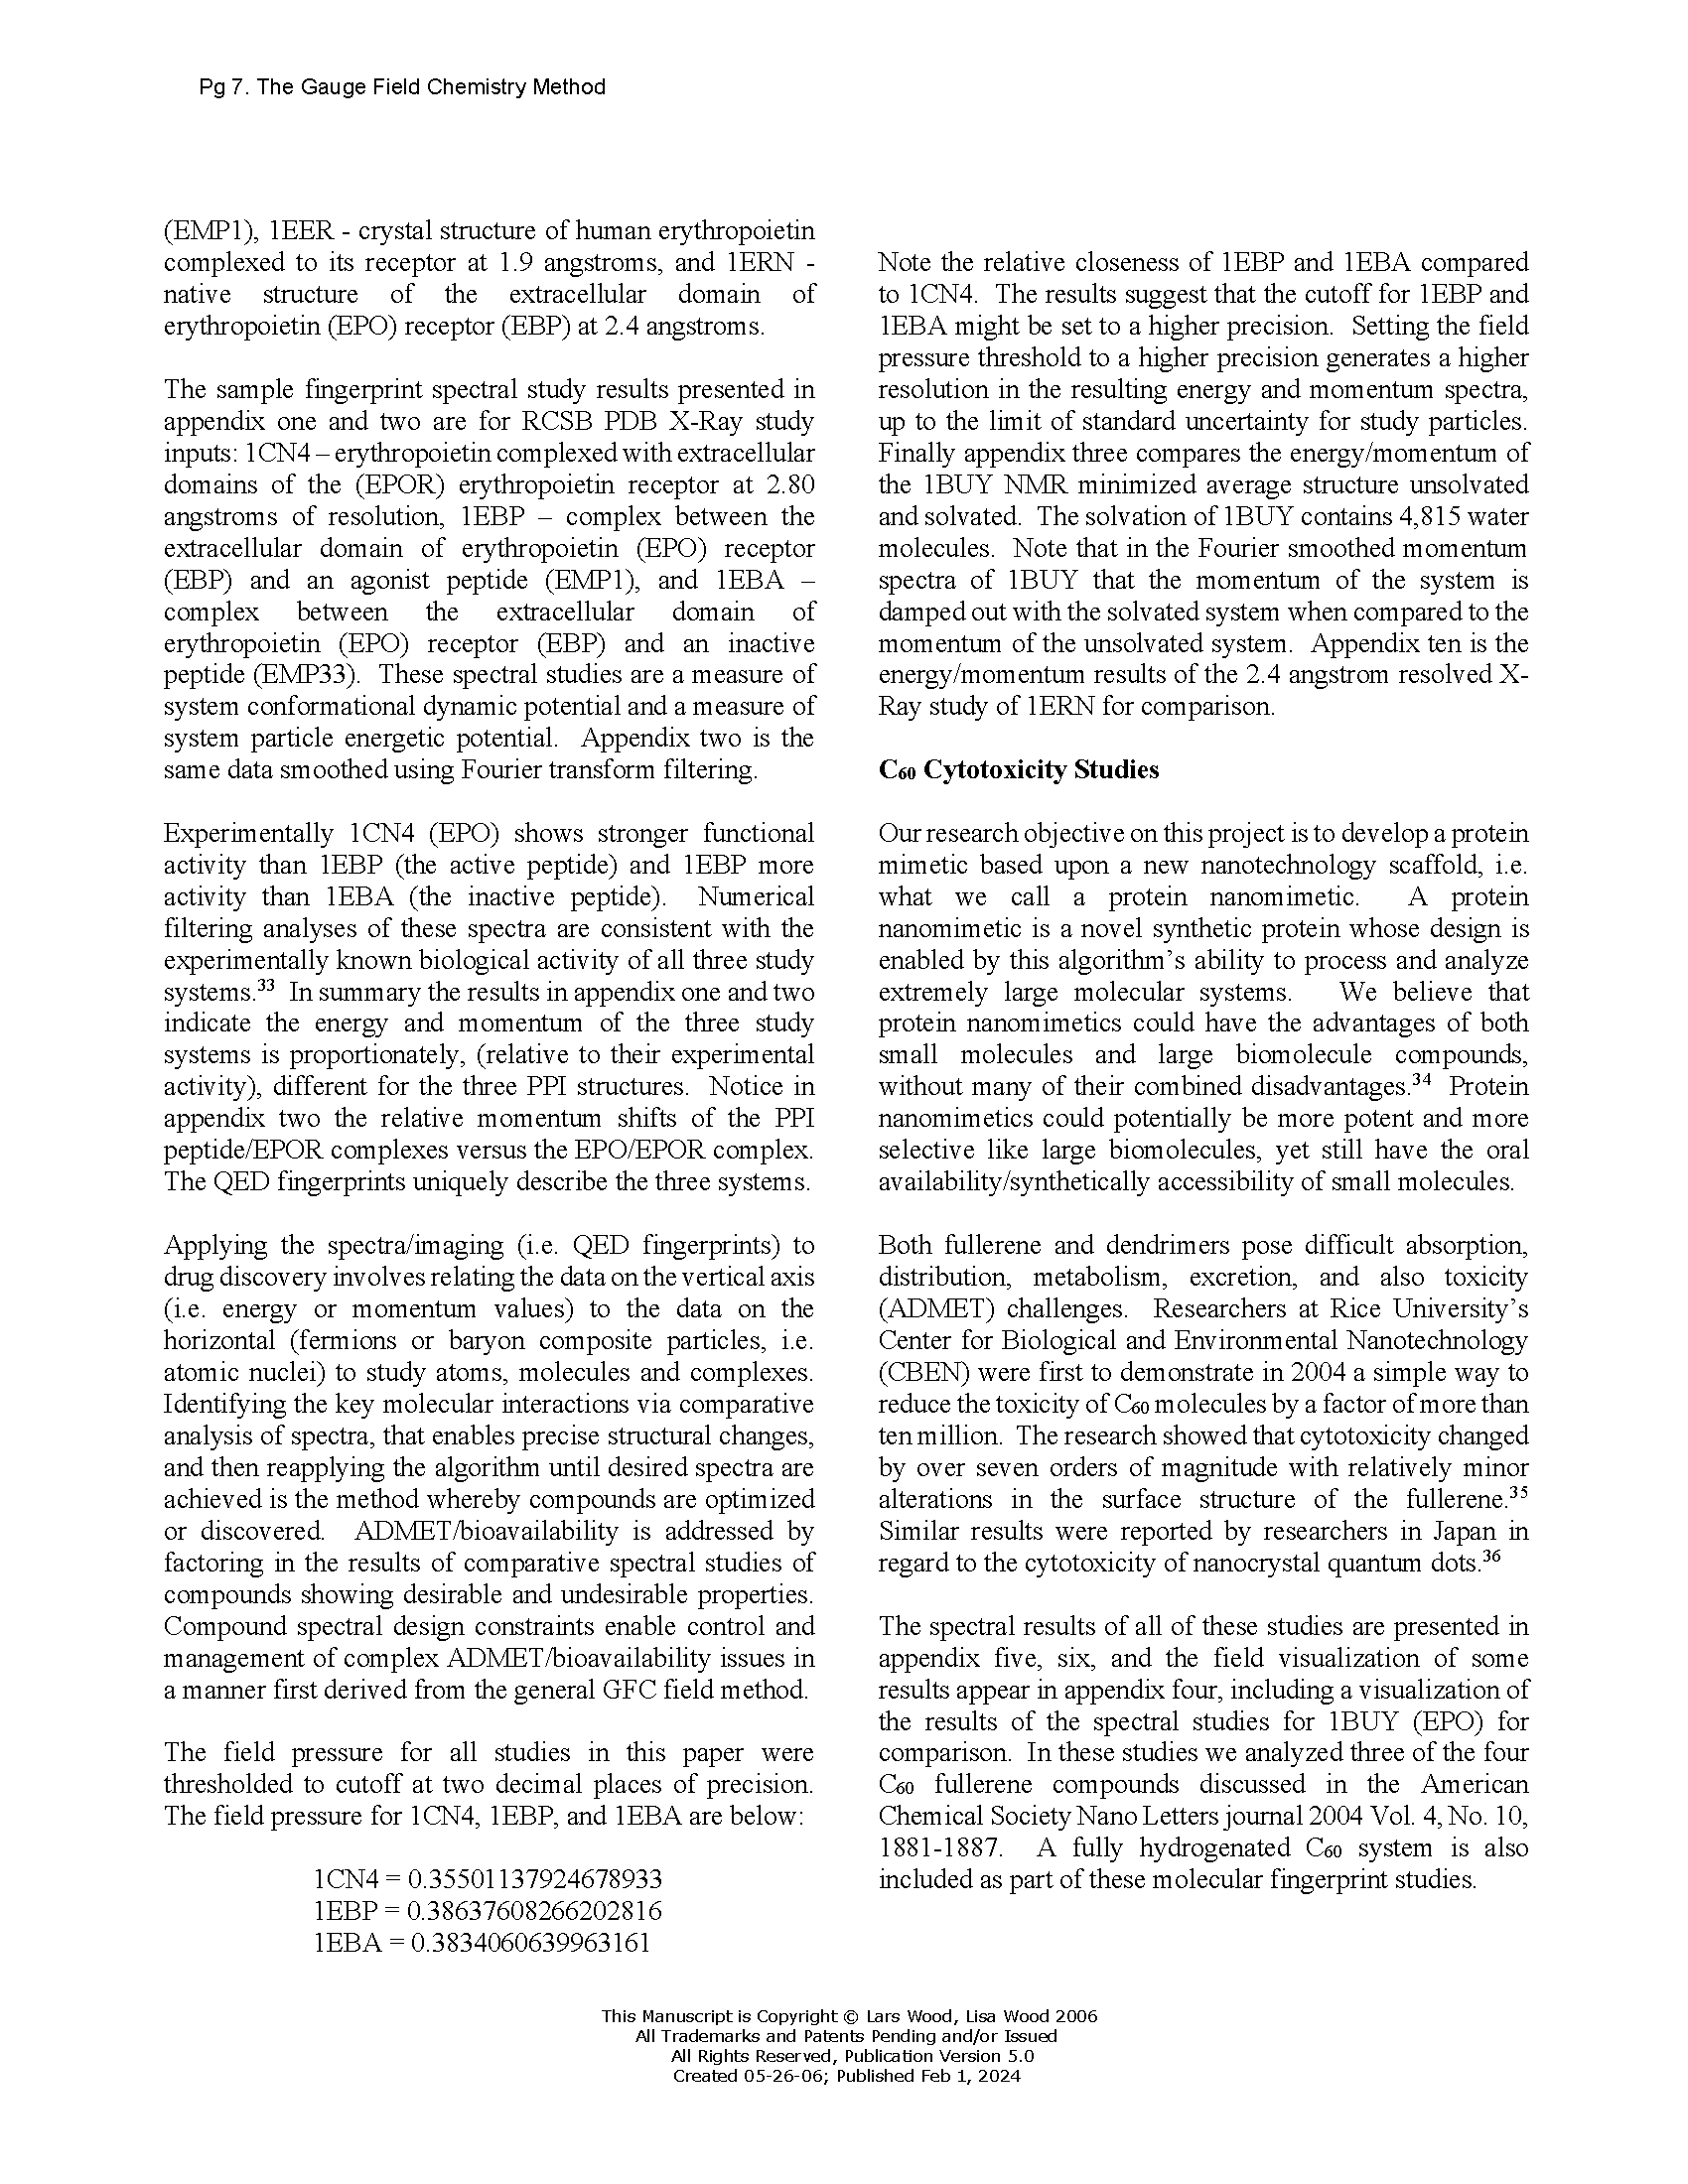 The Gauge Field Chemistry Method V5 Published_Page_07.png